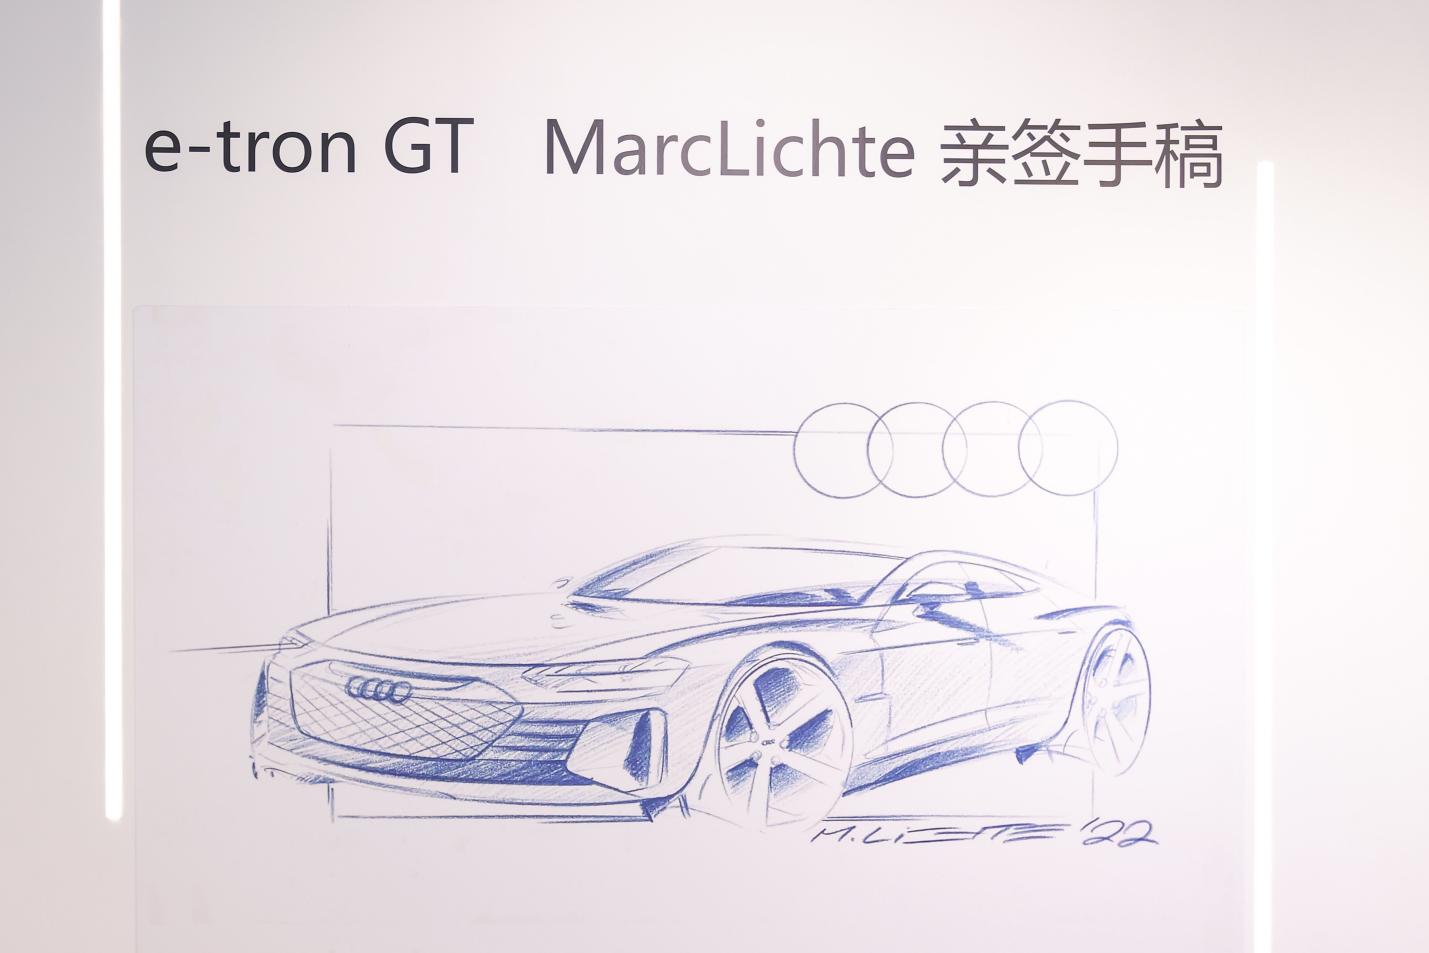 Audi e-tron GT X 佳士得 因艺术同行 定义静奢新境界